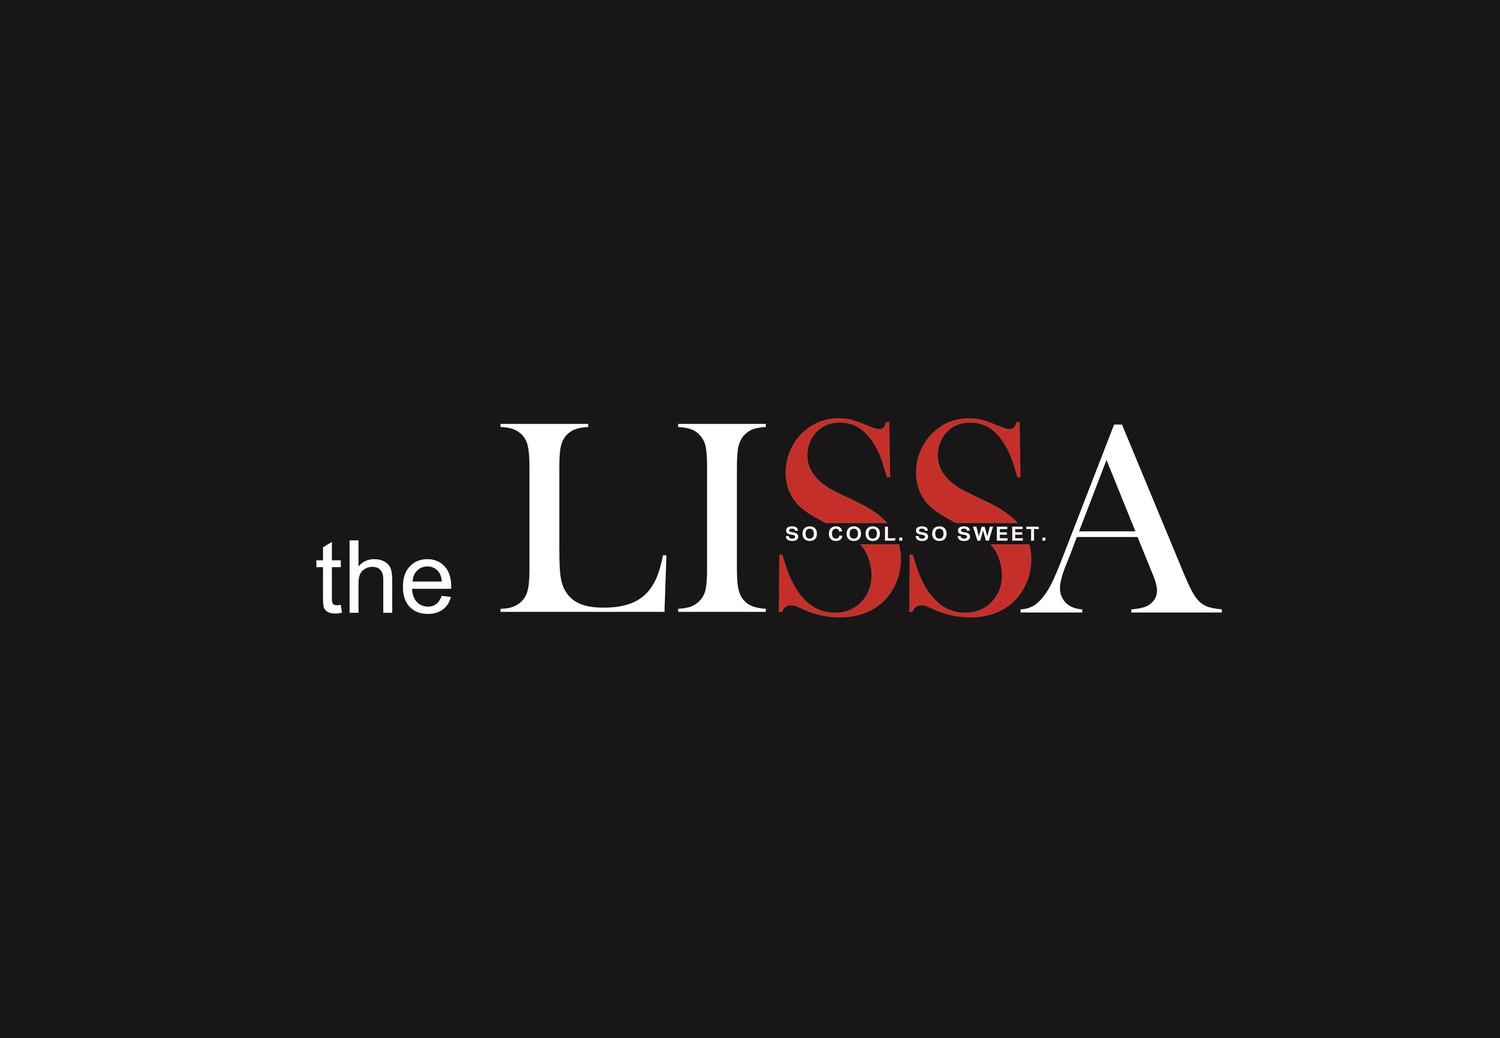 the LISSA